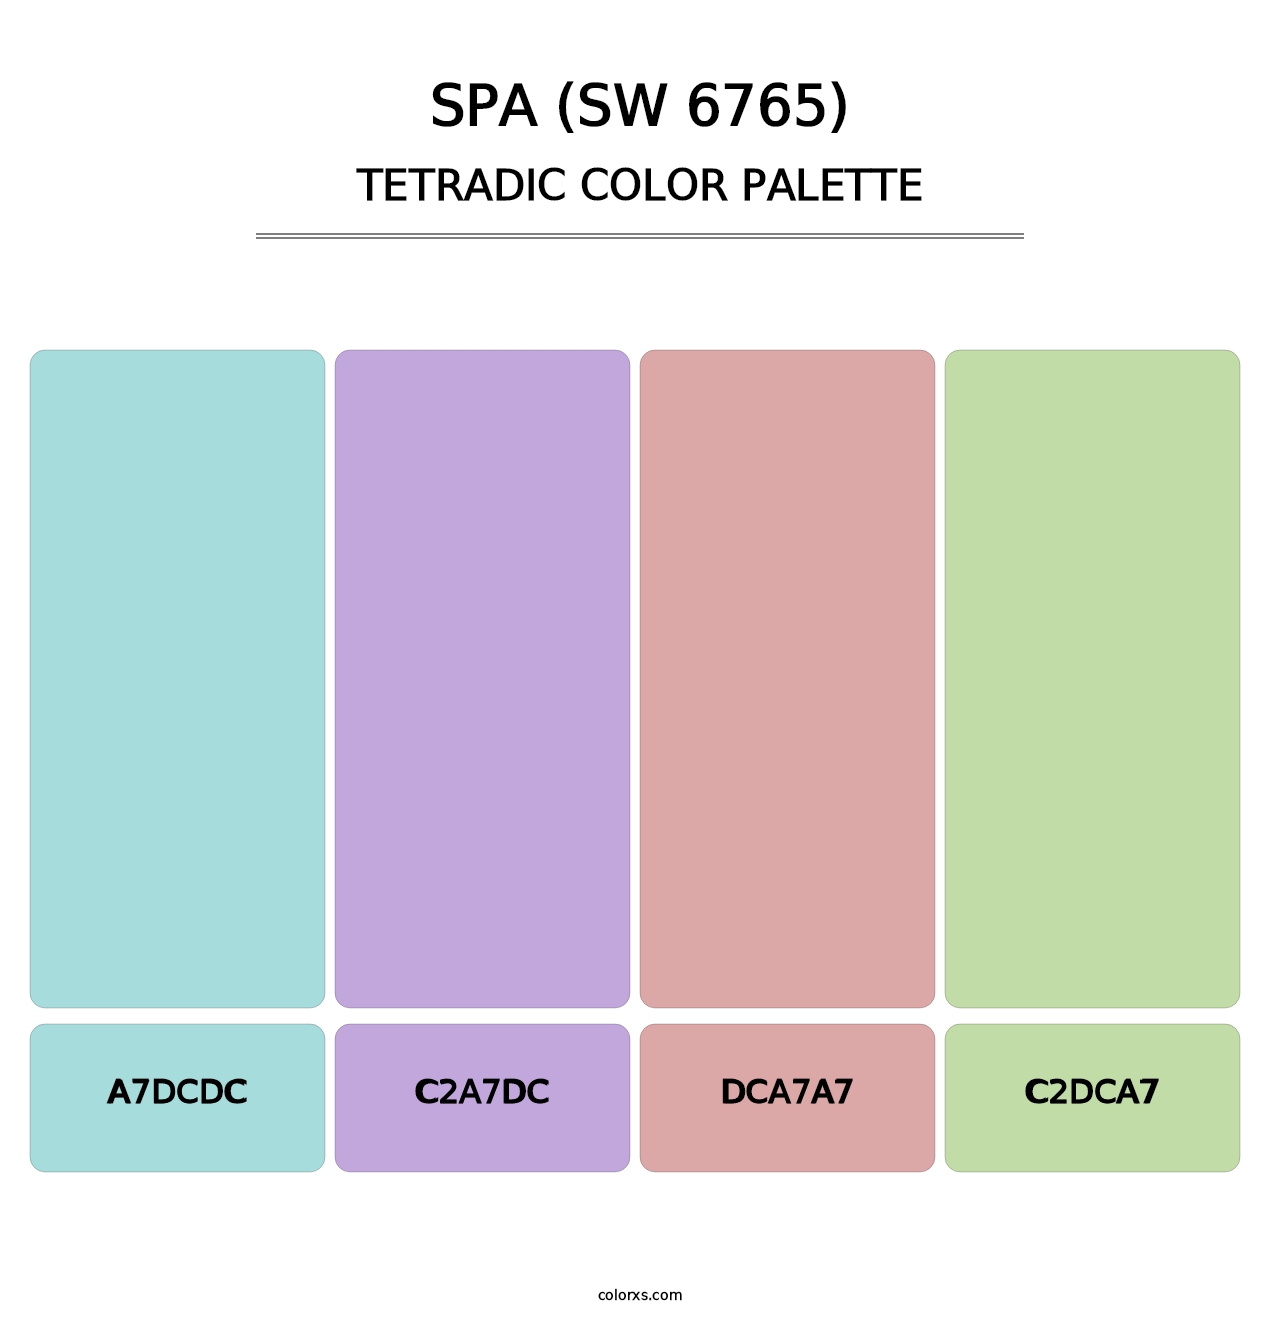 Spa (SW 6765) - Tetradic Color Palette